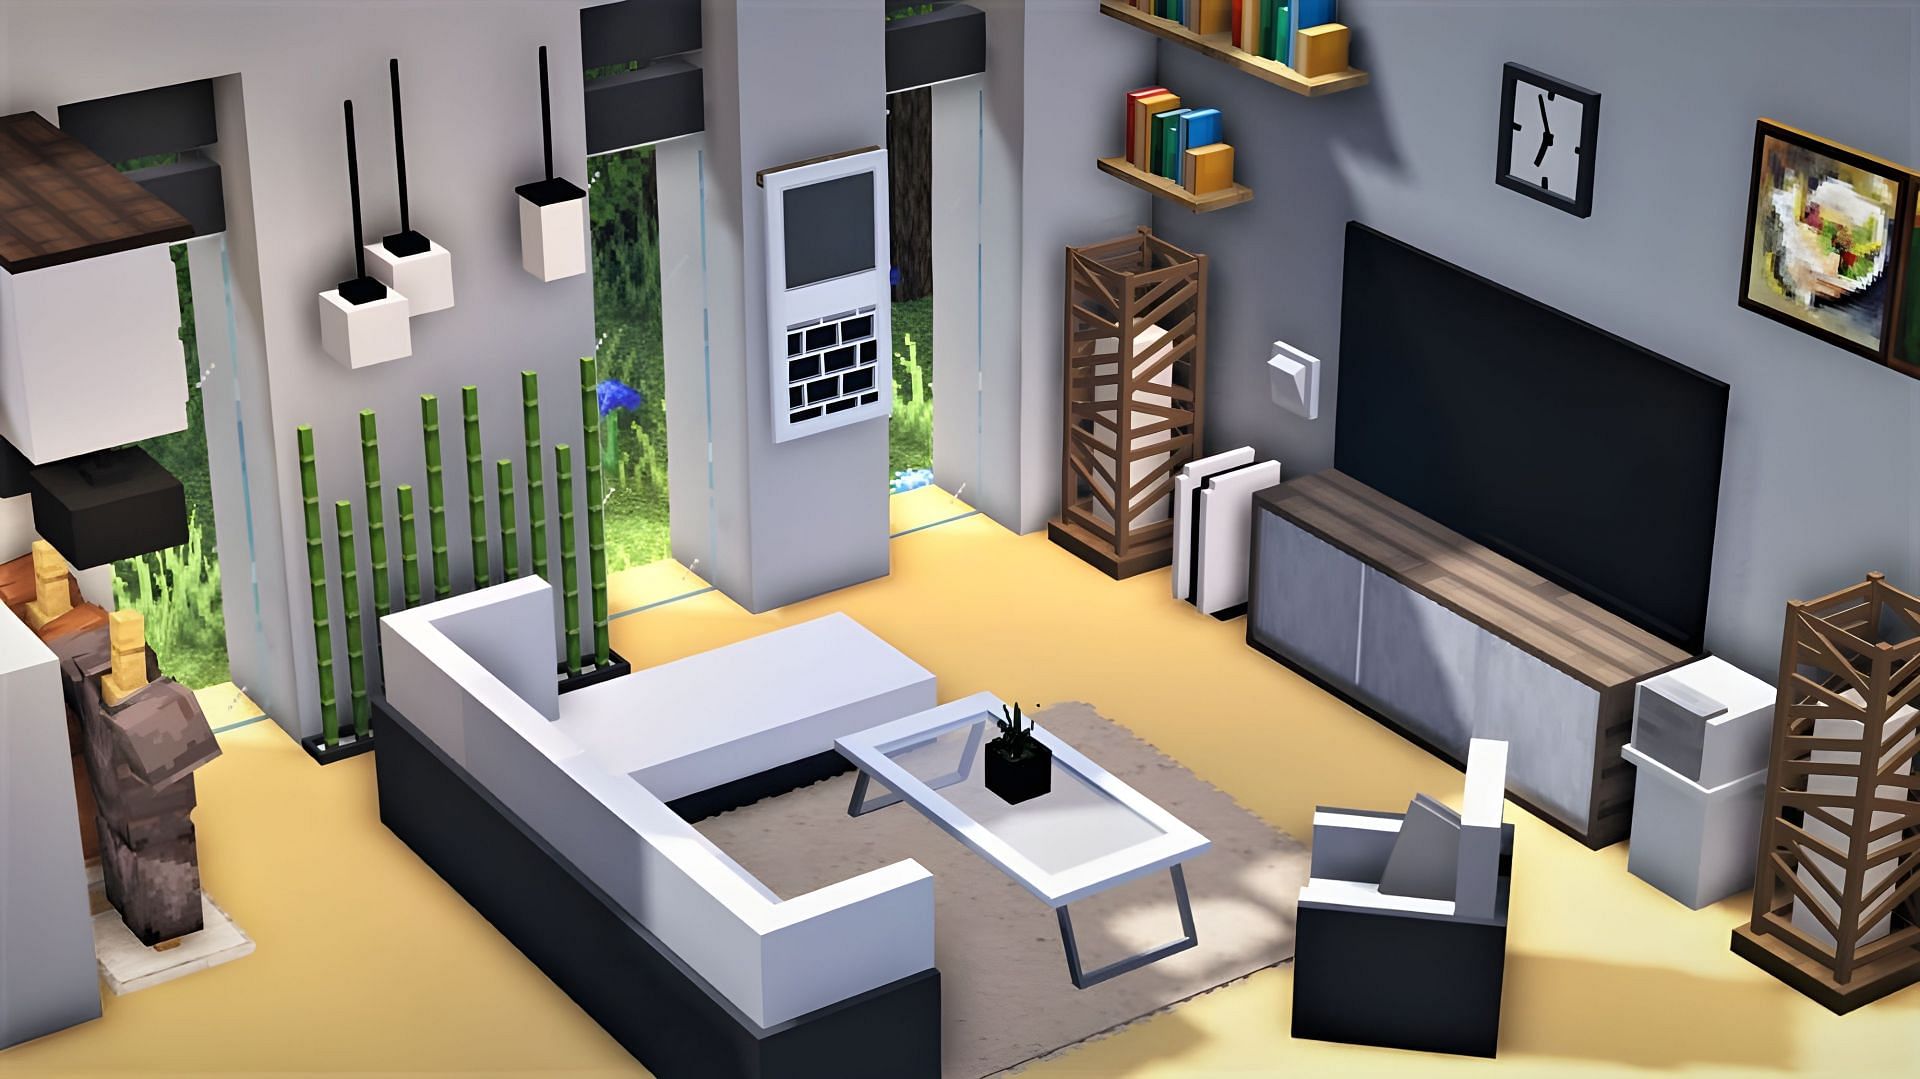 Minecraft: 10 Simple Interior Decoration Ideas and Designs! 